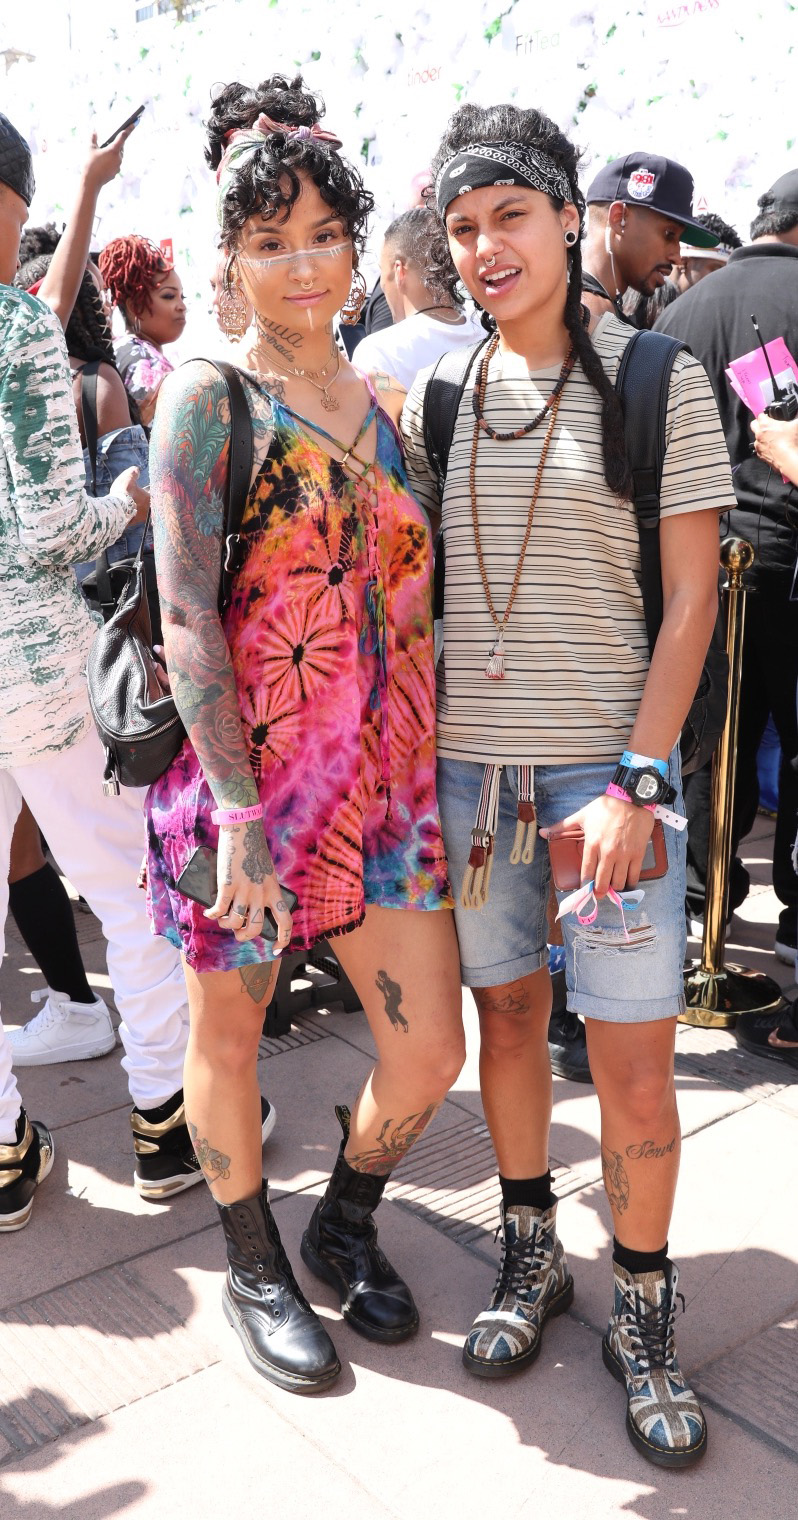 Kehlani and girlfriend Third Annual Amber Rose Slut Walk - Los Angeles